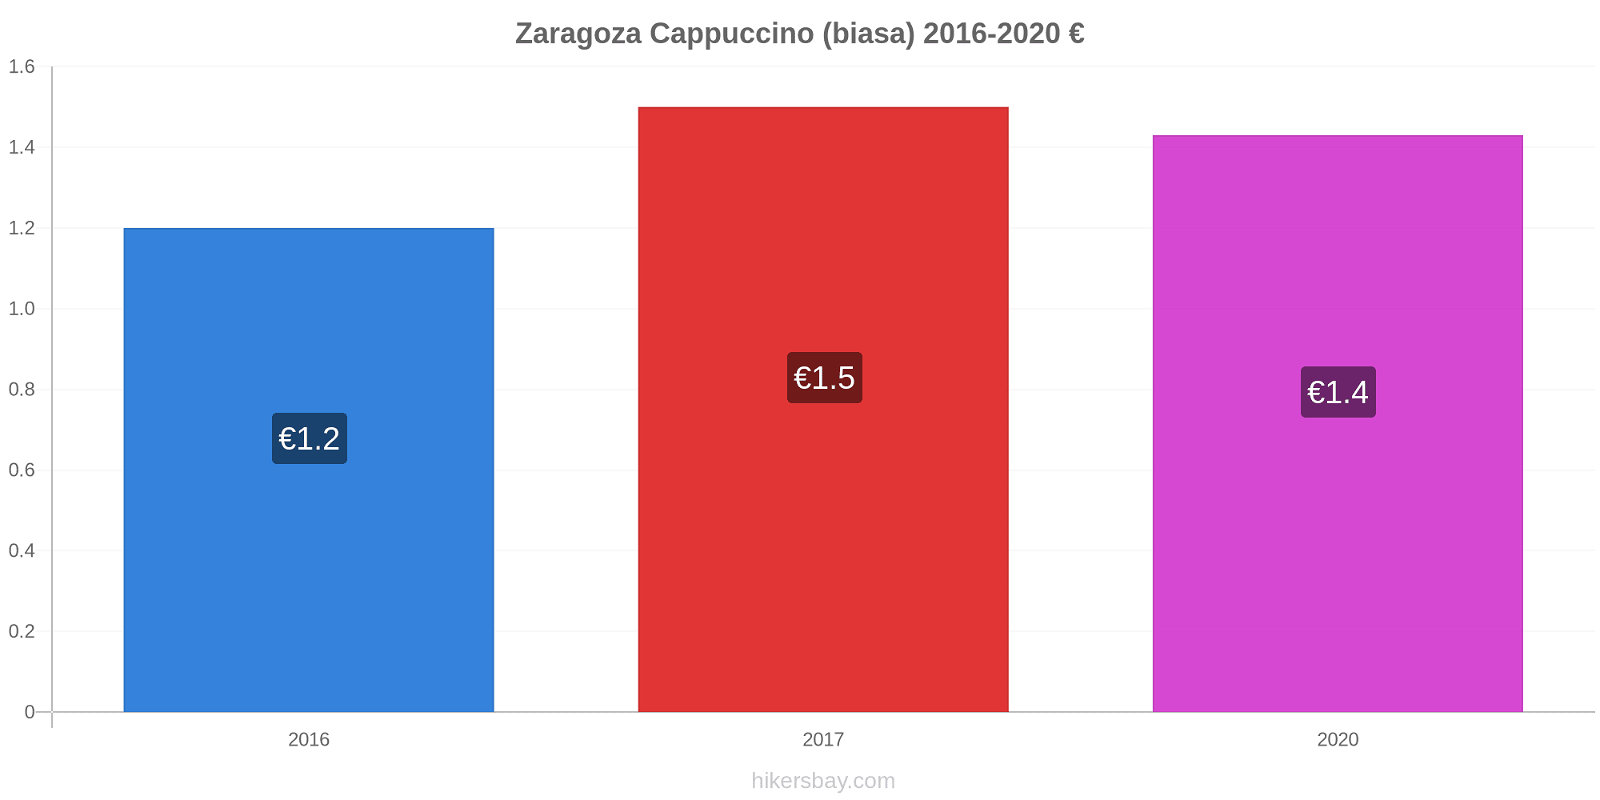 Zaragoza perubahan harga Cappuccino (biasa) hikersbay.com